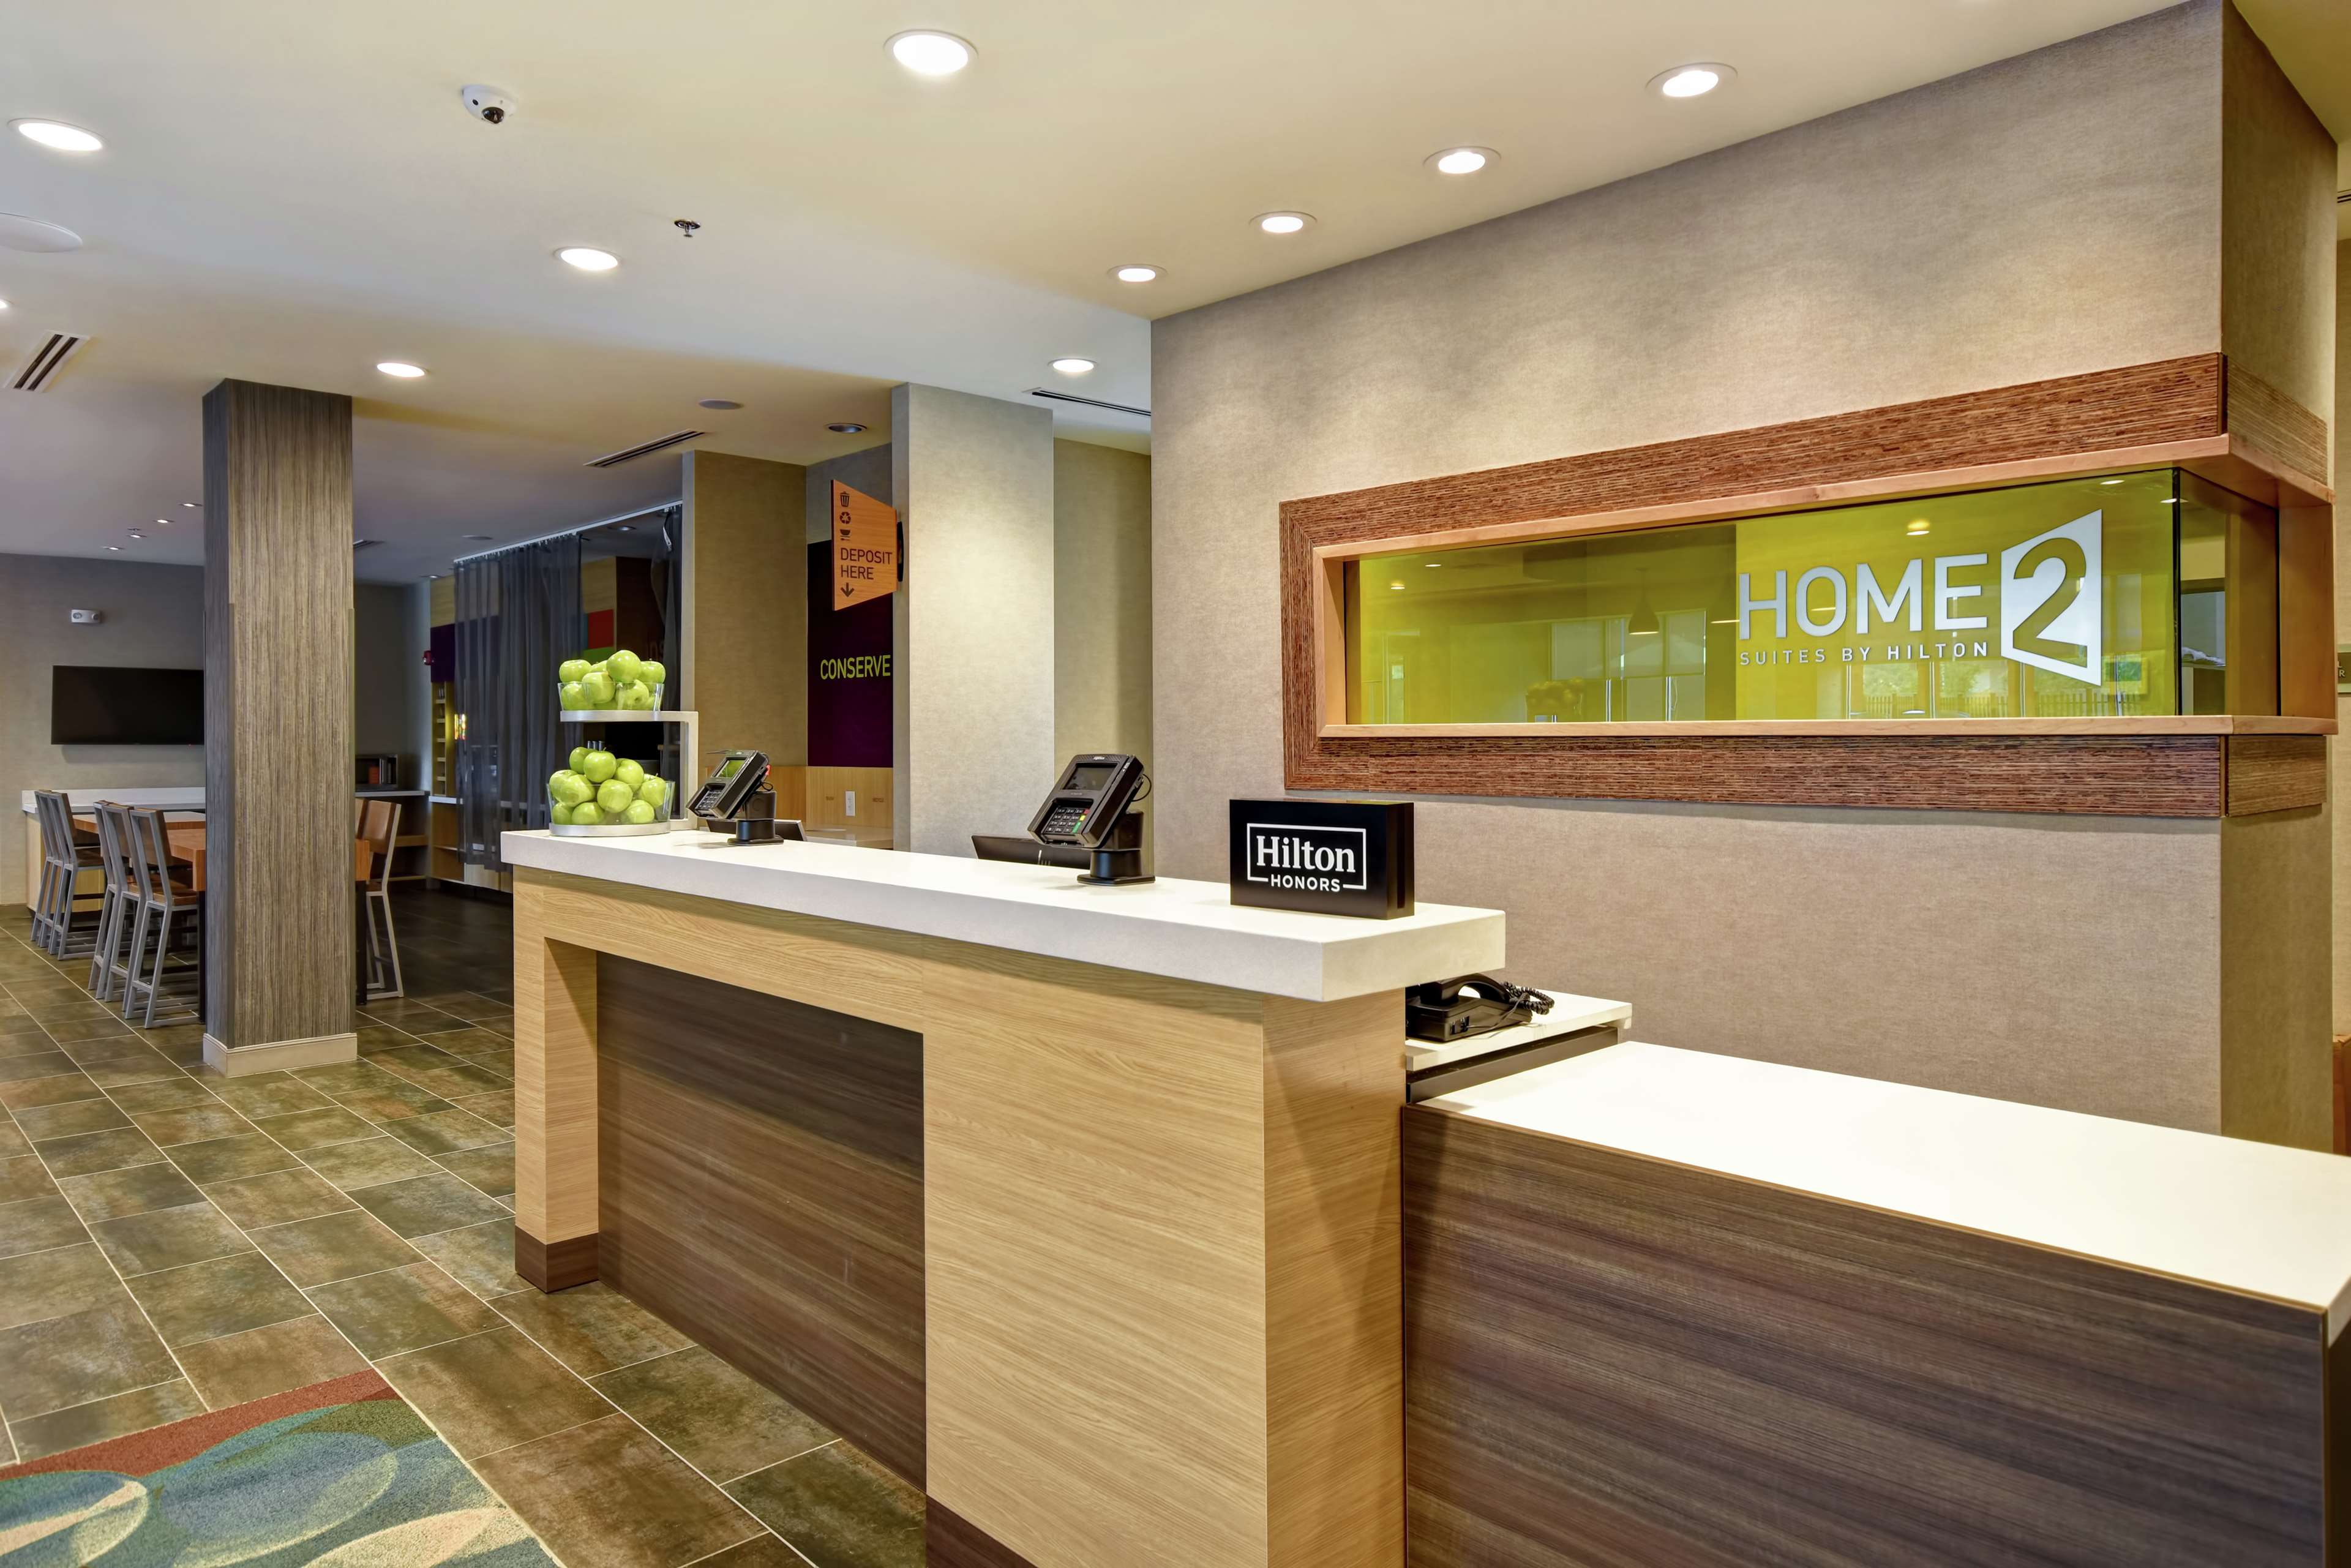 Home2 Suites by Hilton Atlanta Marietta Photo